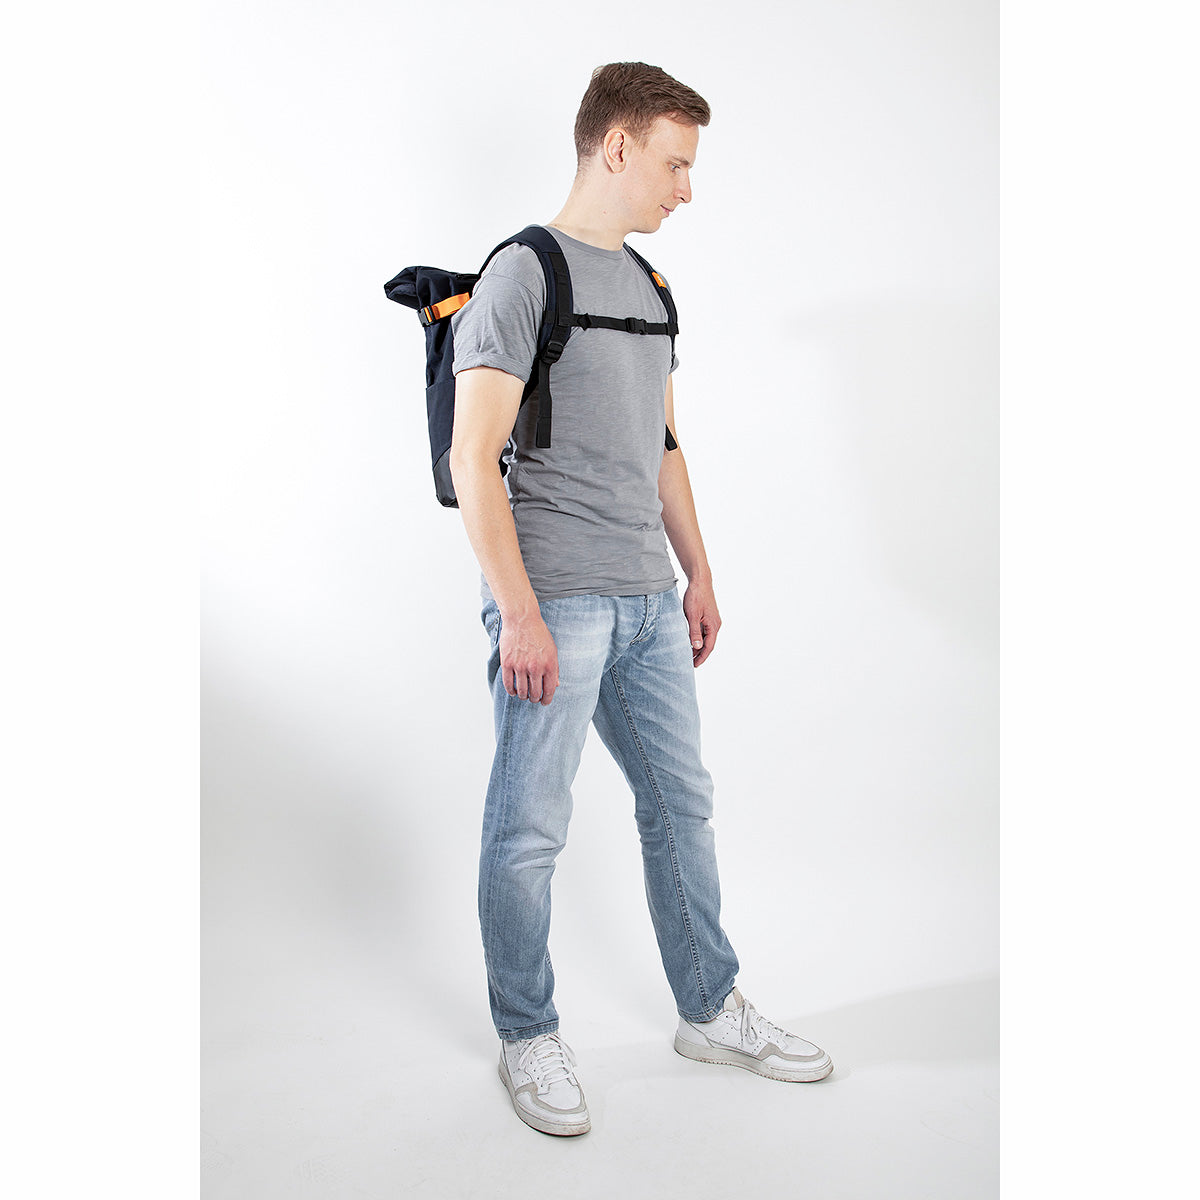 Road Mentor Rolltop Backpack M (14'')